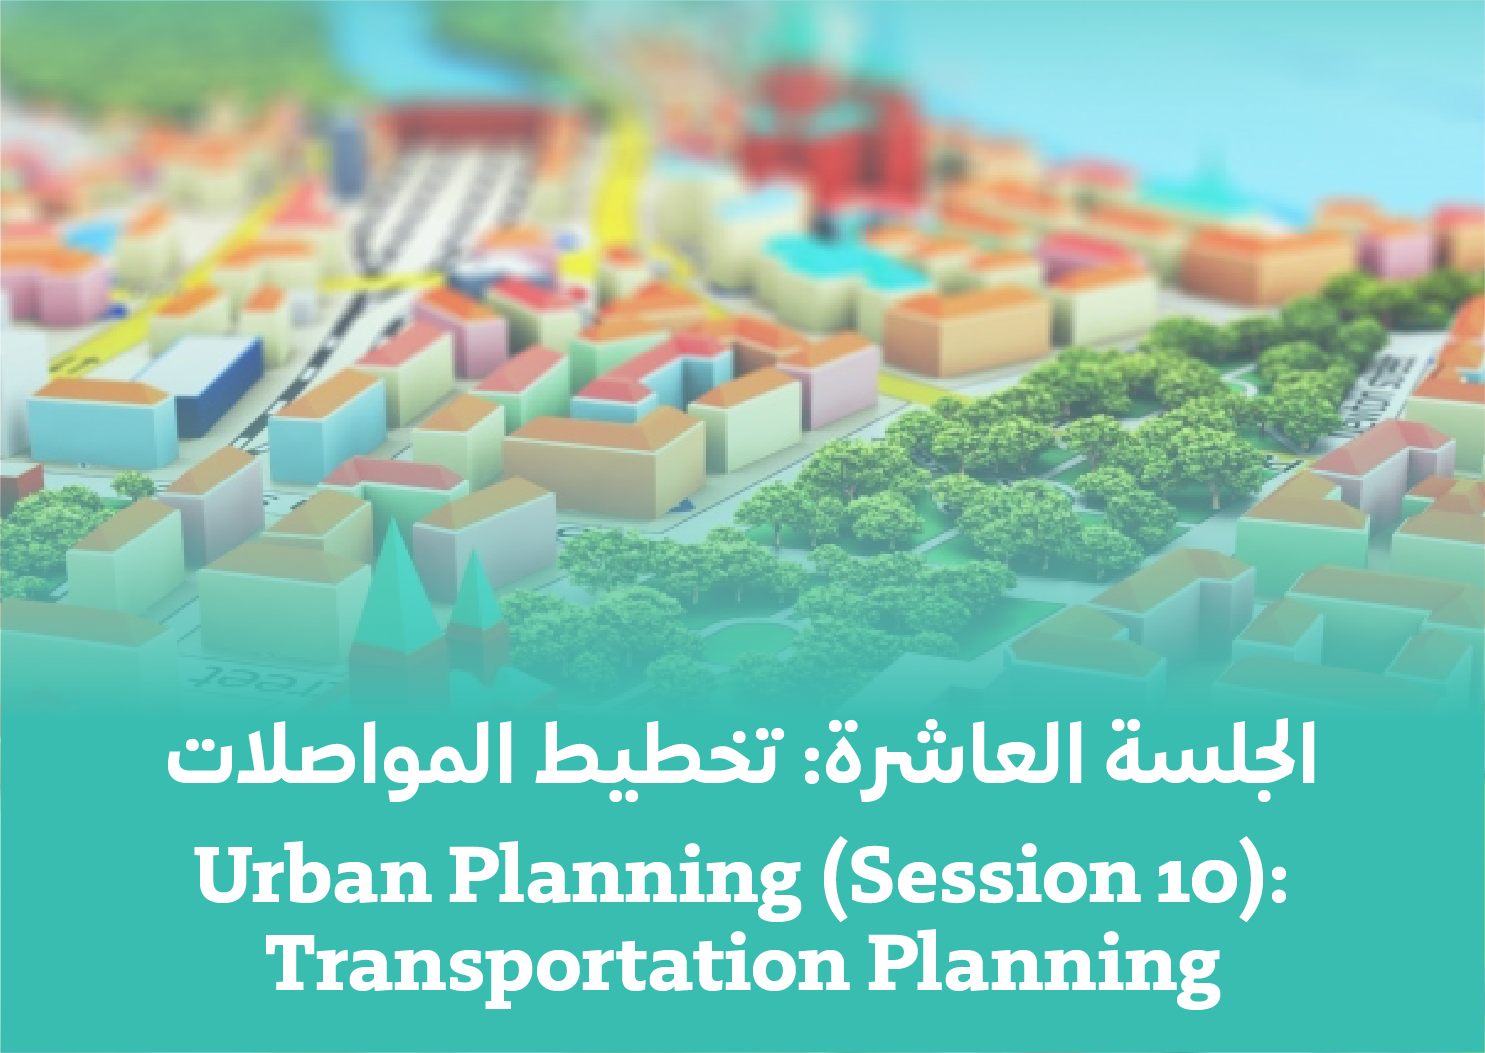 Session 10: Transportation Planning